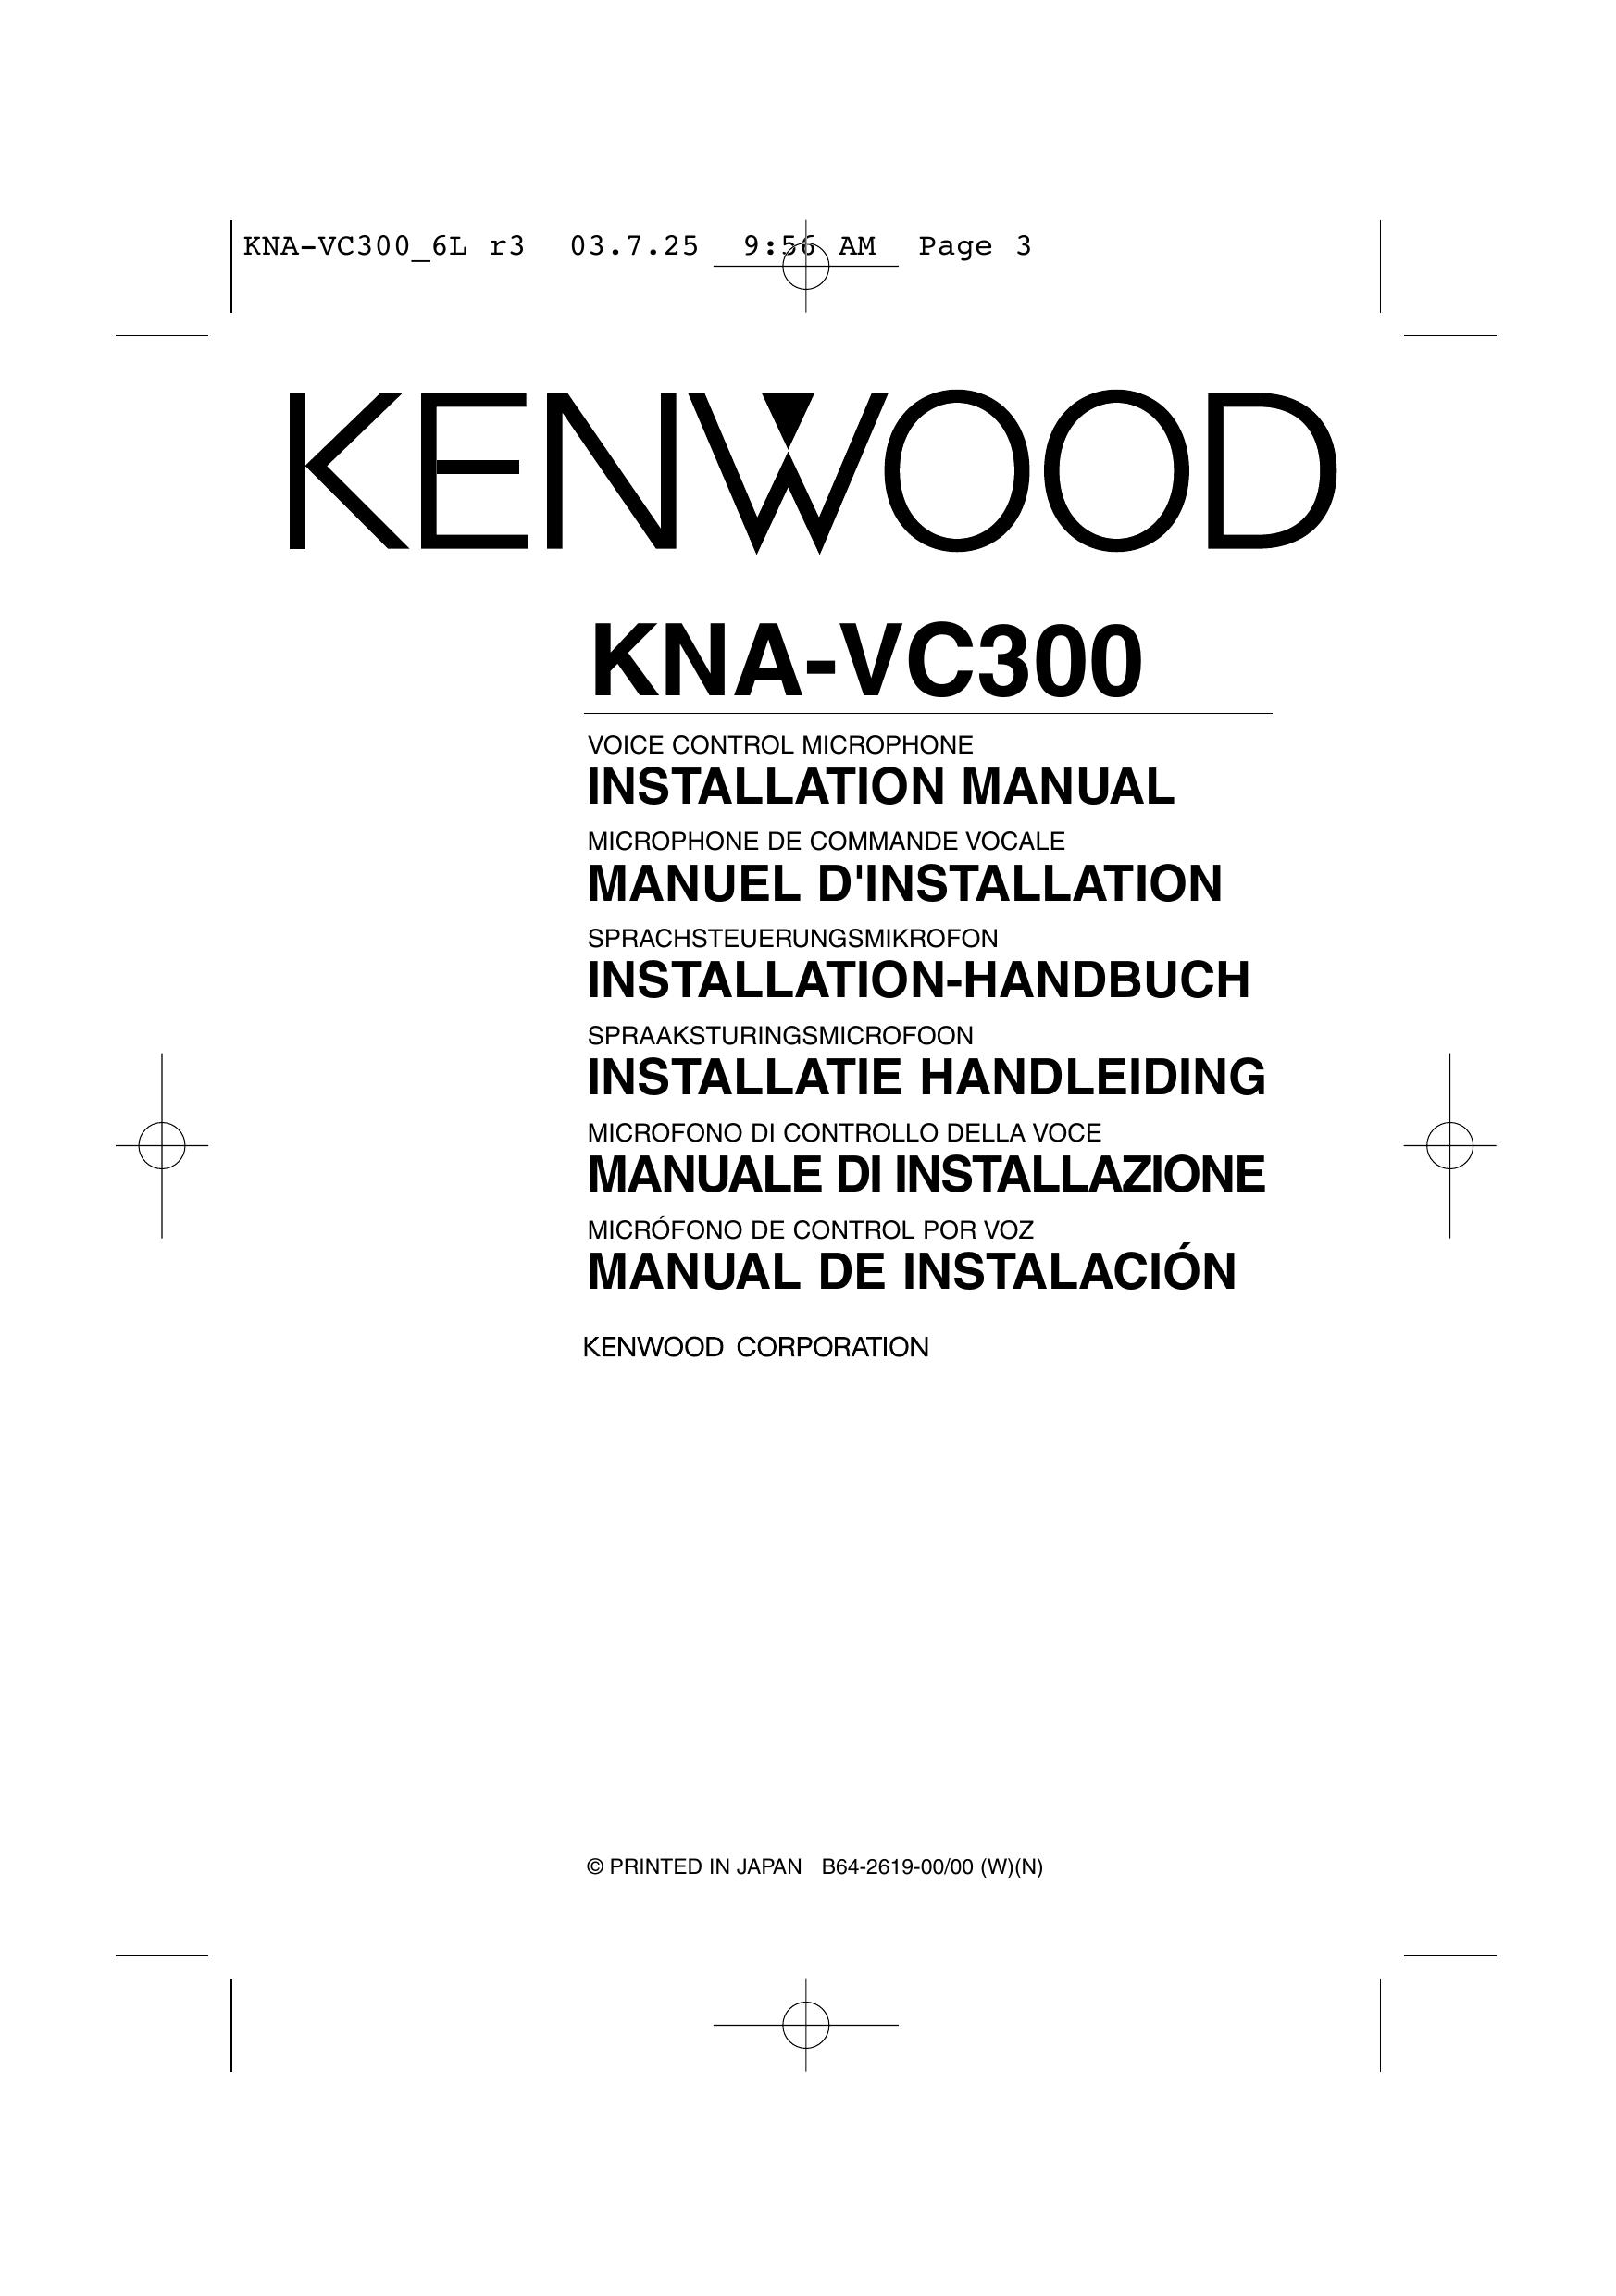 Kenwood KNA-VC300 Microphone User Manual